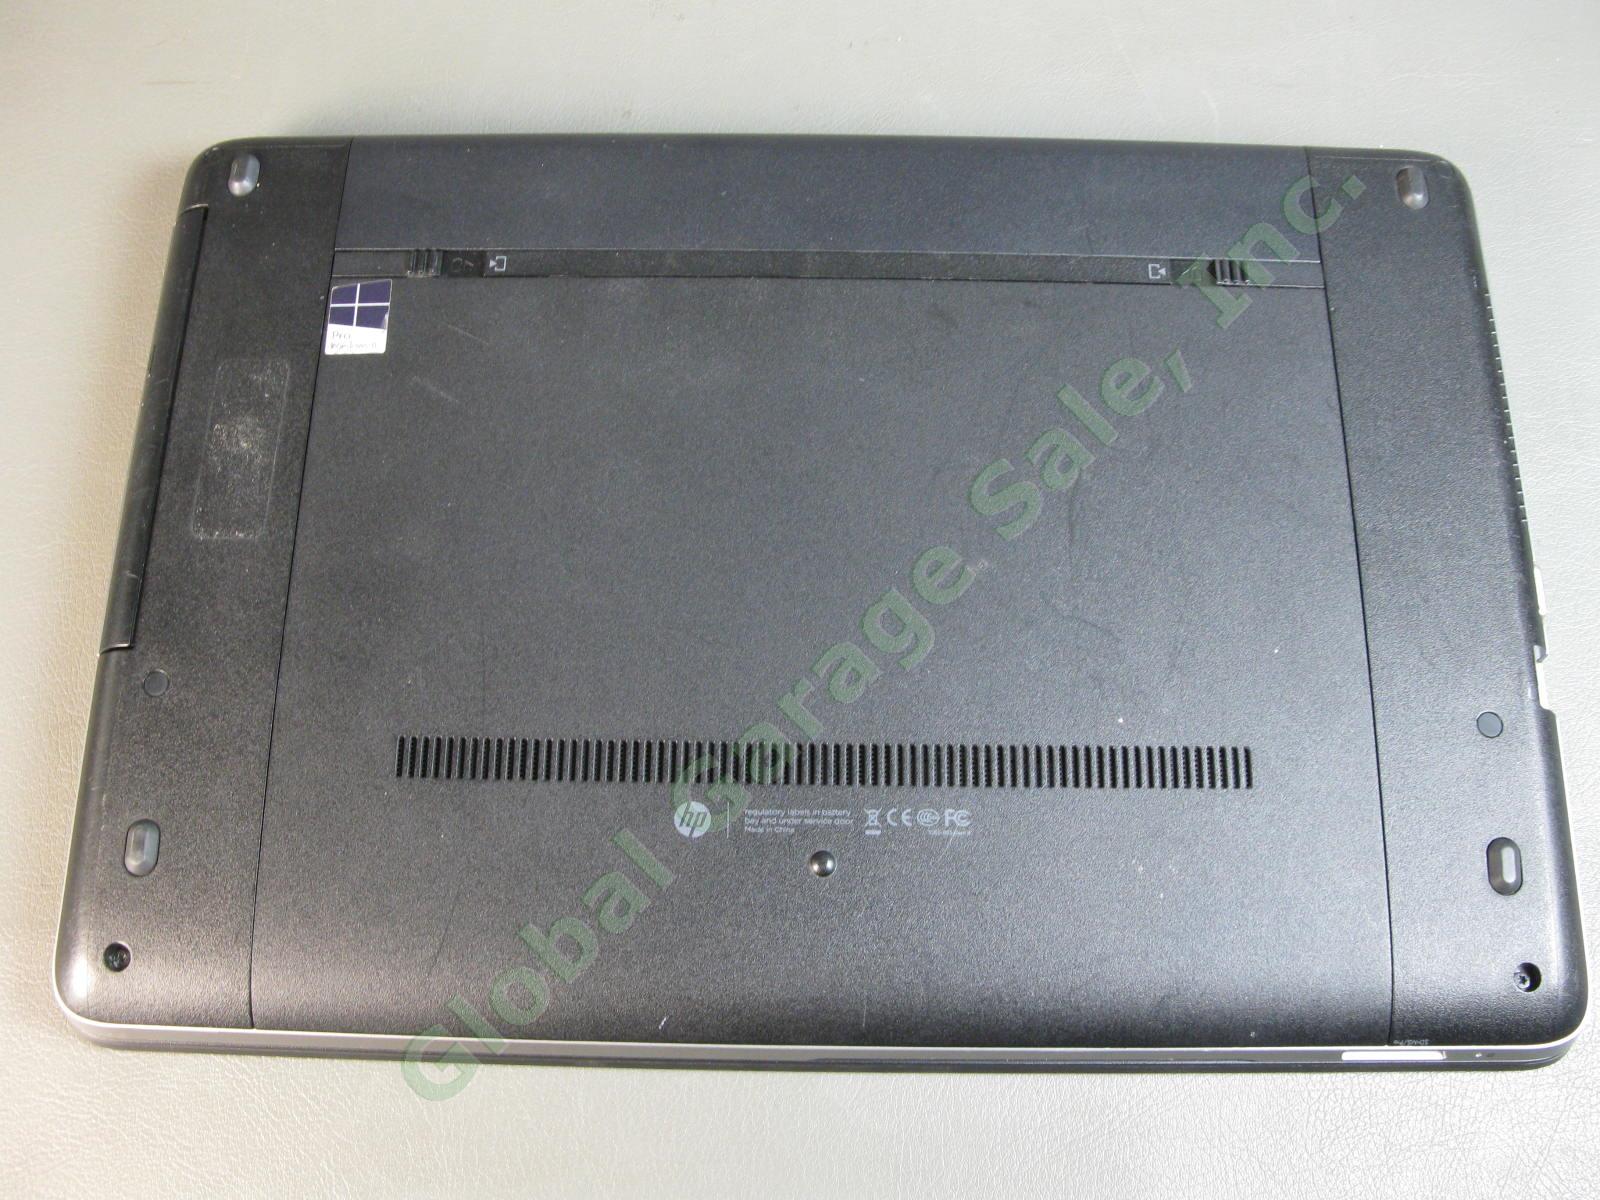 HP ProBook 450 G1 Laptop Computer i5-4200M 4GB 320GB Win10 WIFI DVD Webcam Power 8